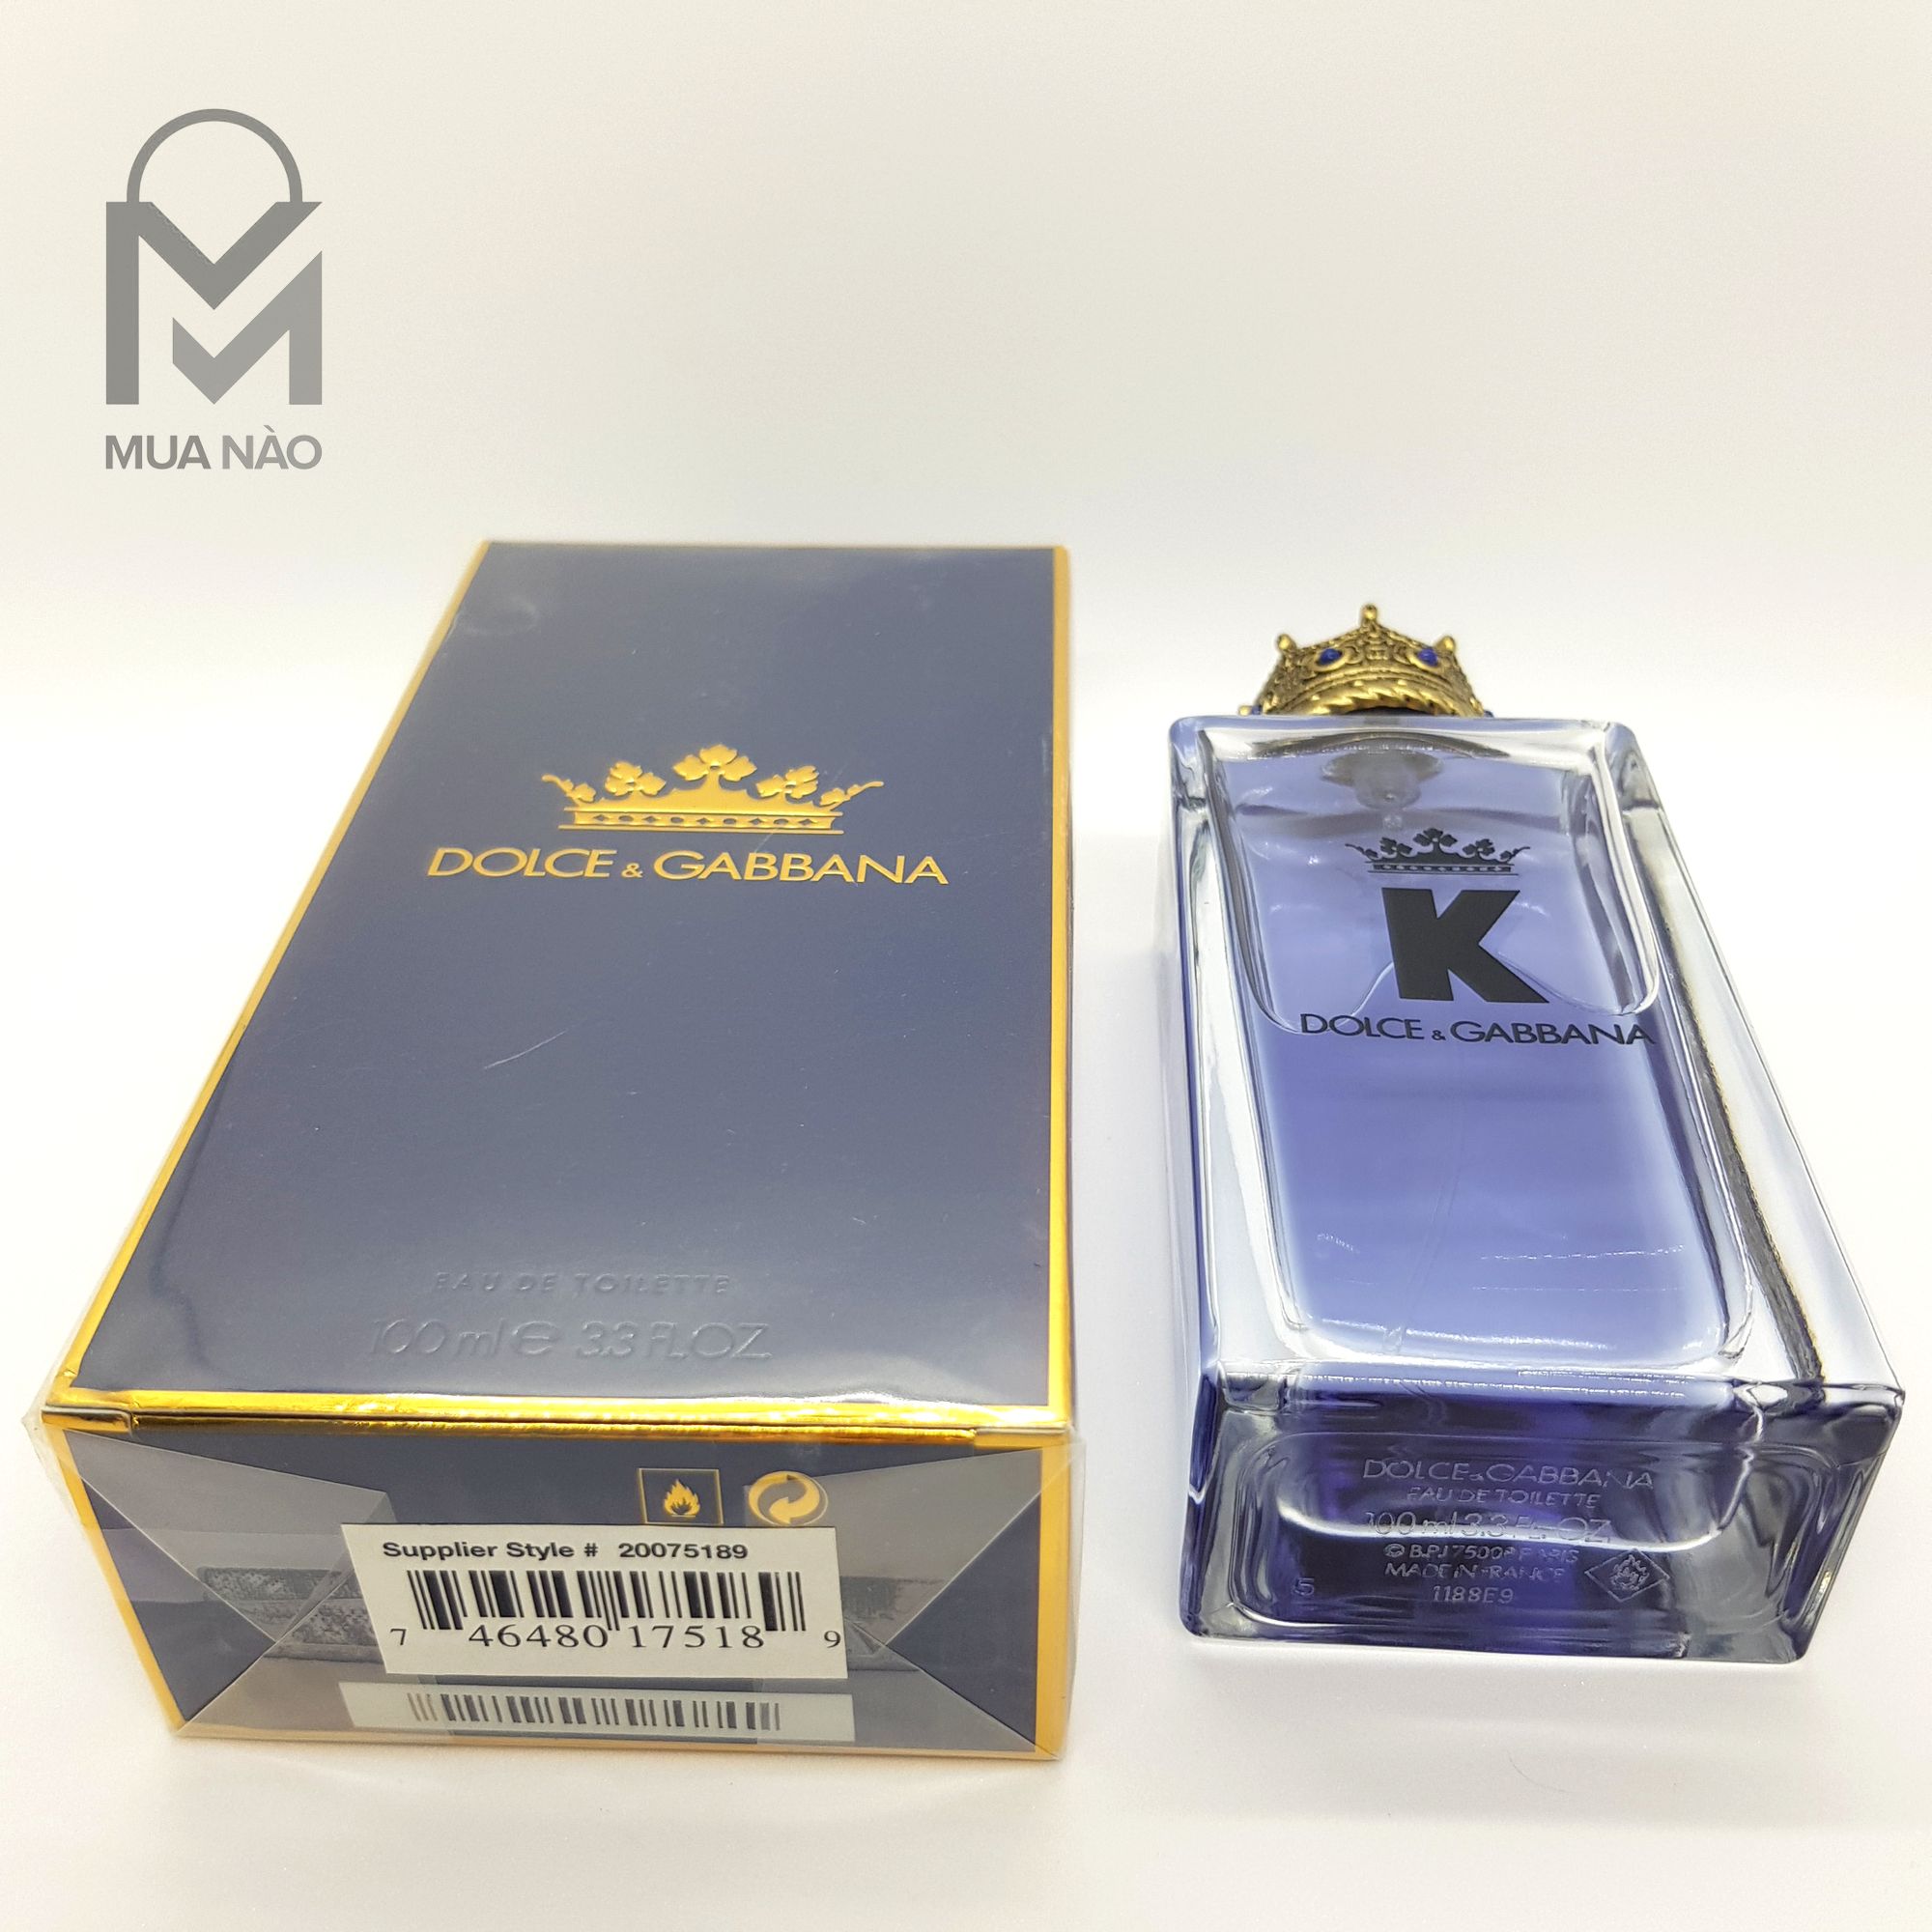 Nước hoa nam Dolce &amp; Gabbana K EDT 100ml